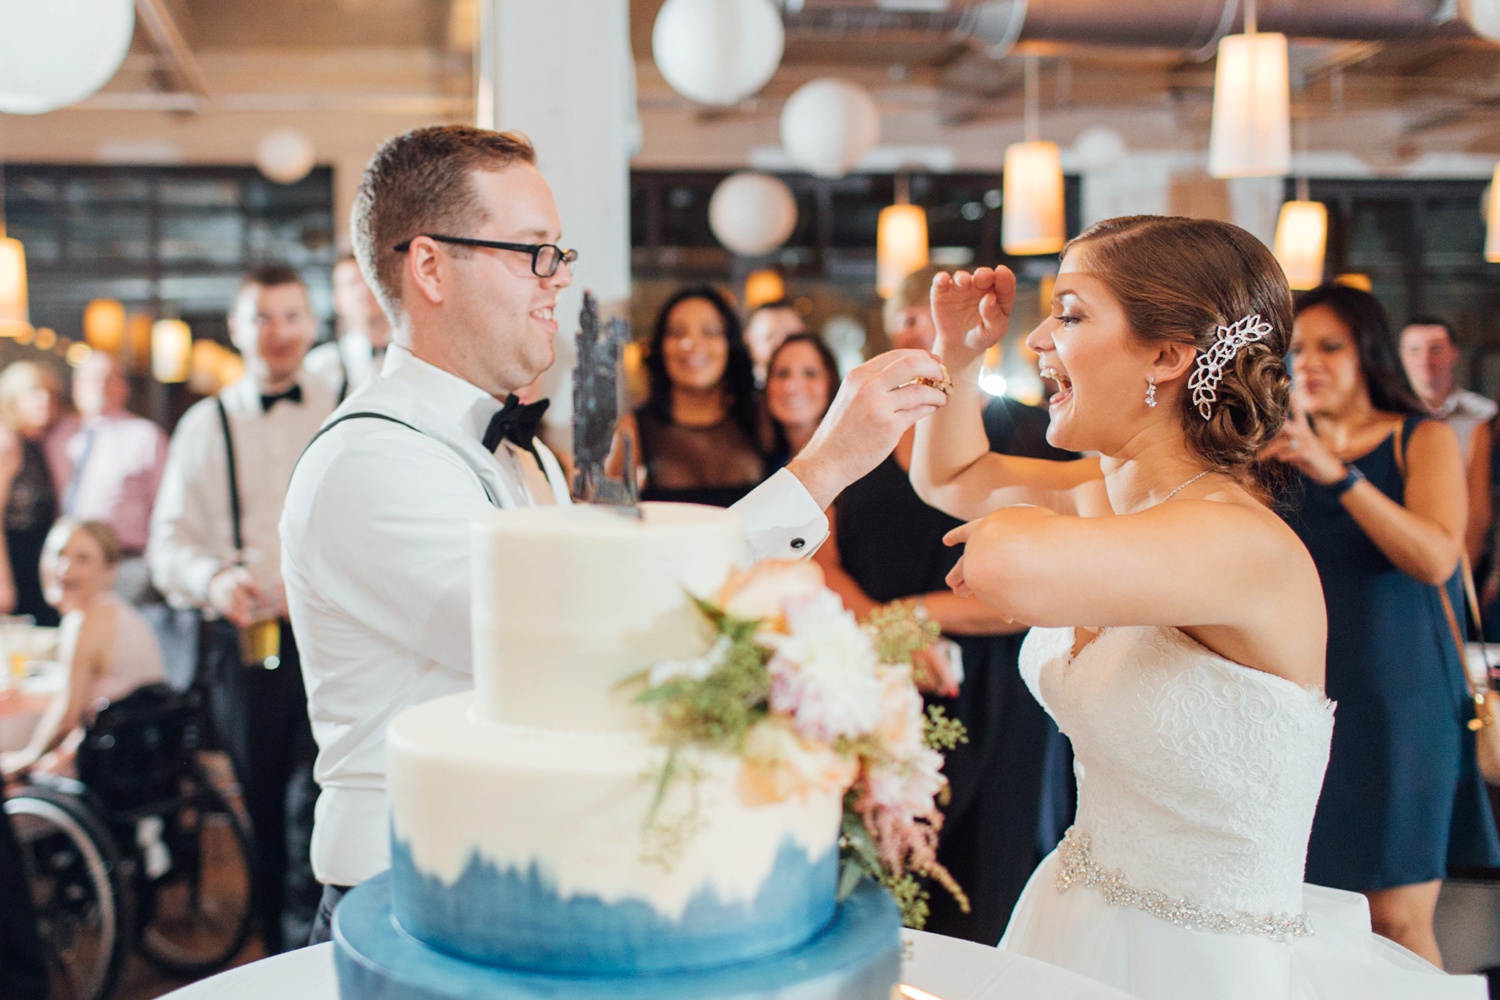 Lauren + Alec - Manayunk Brewing Company Wedding - Philadelphia Wedding Photographer - Alison Dunn Photography photo